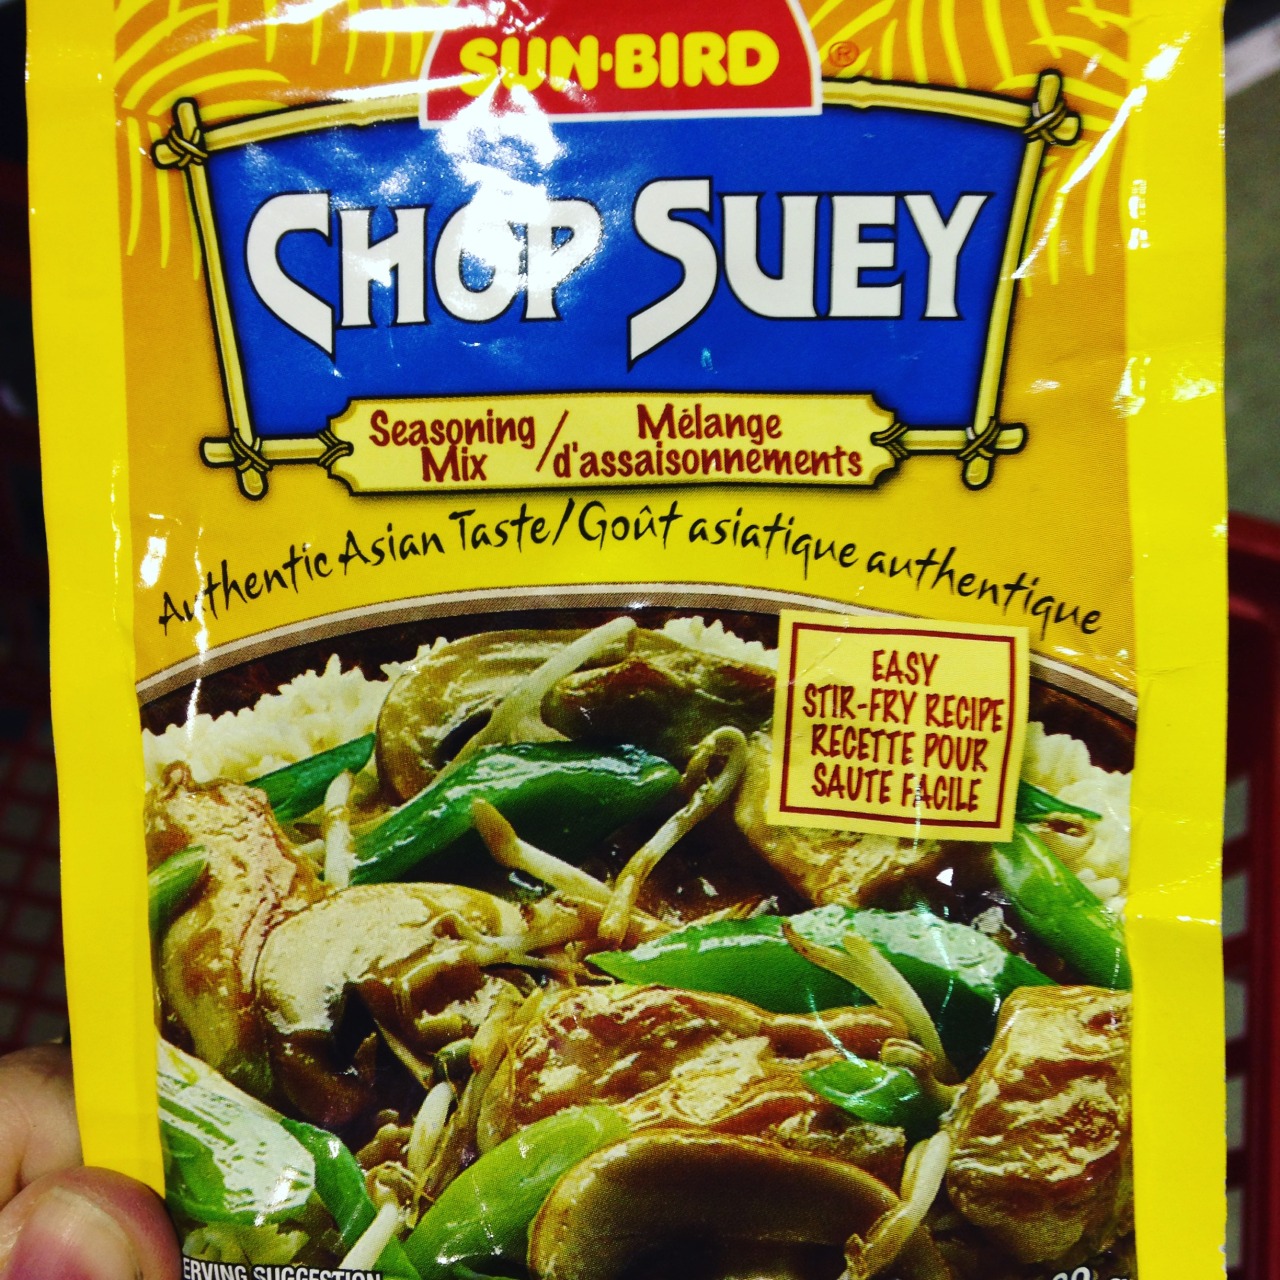 Happy National Chop Suey Day! -